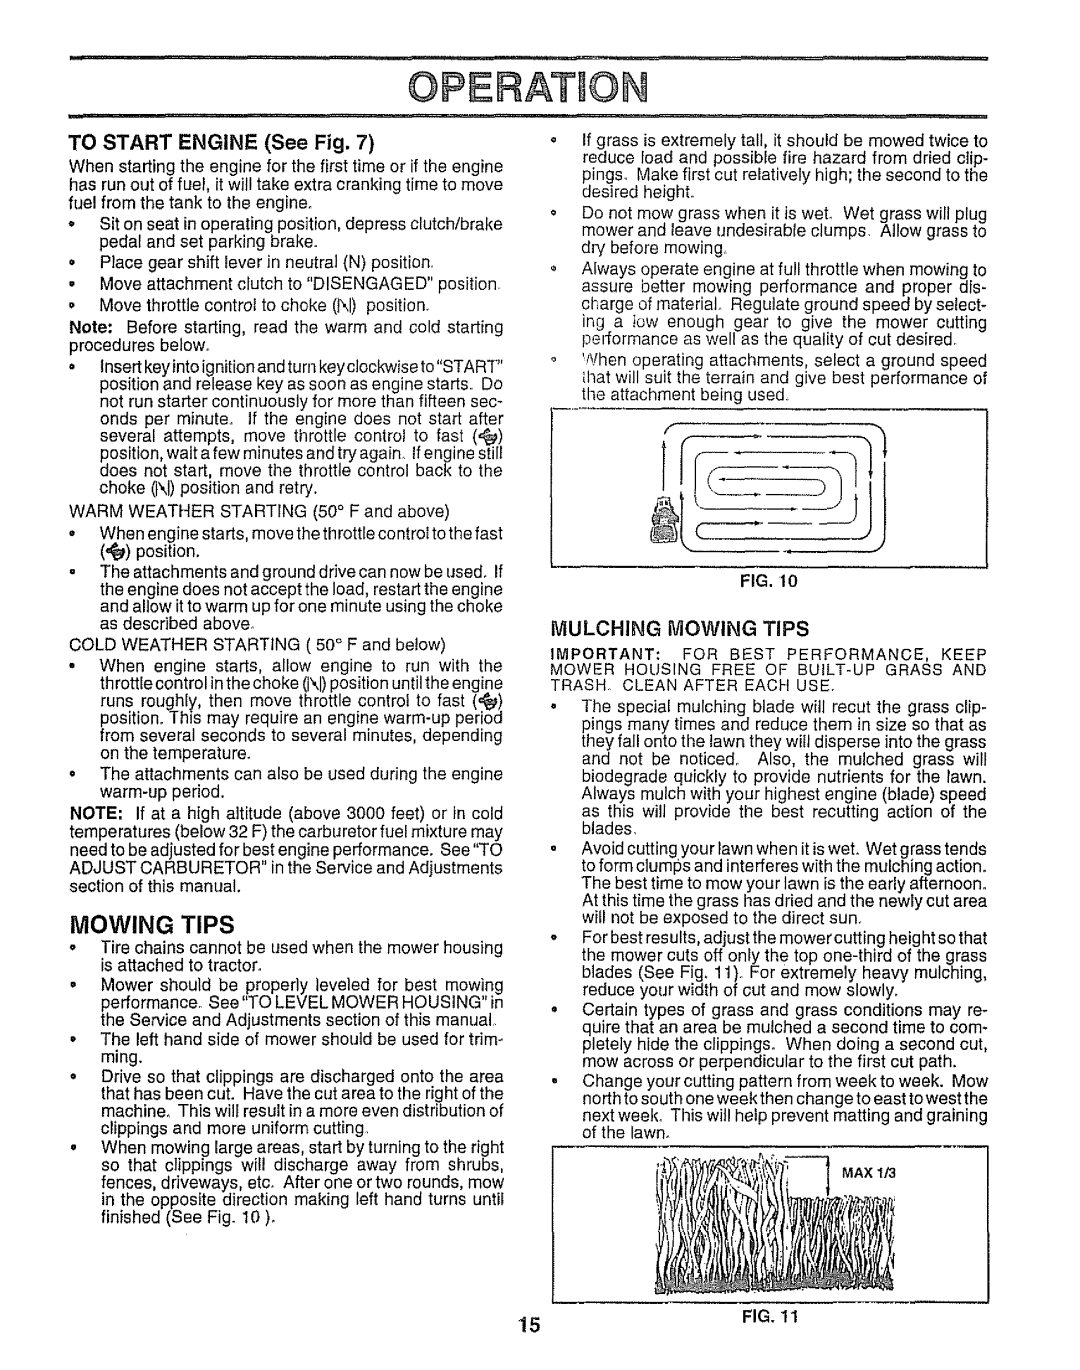 Sears 917.25958 manual Mulching Mowing Tips, Operation 